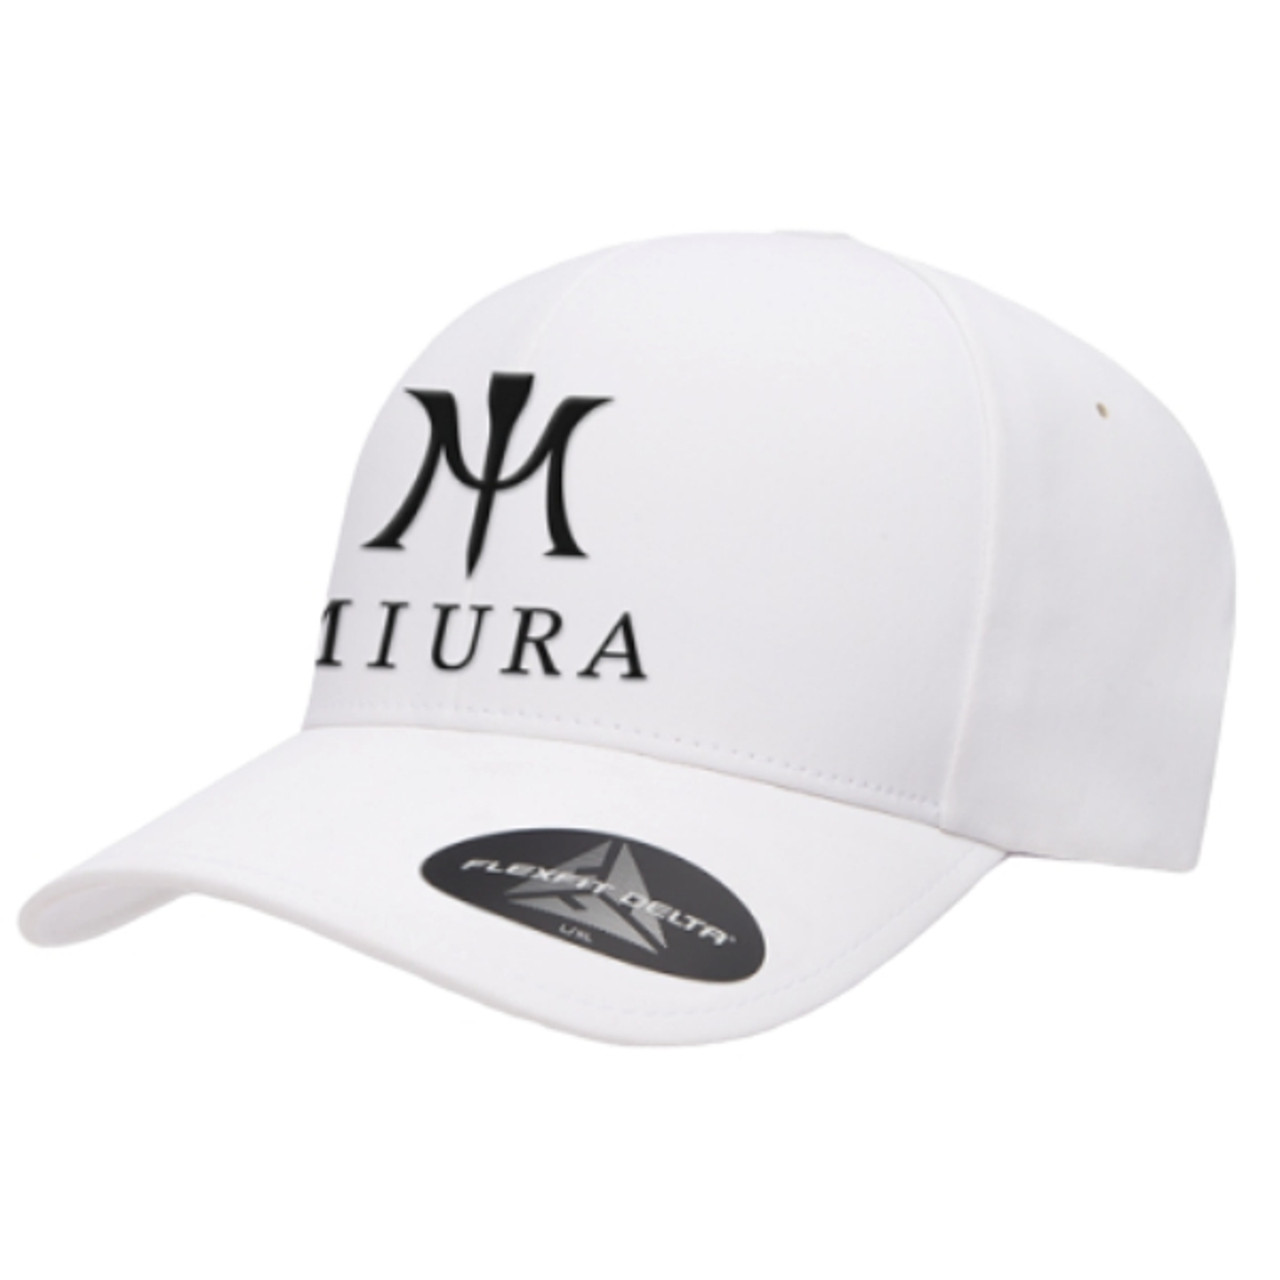 Miura FlexFit Delta Hats - Tour Shop Fresno